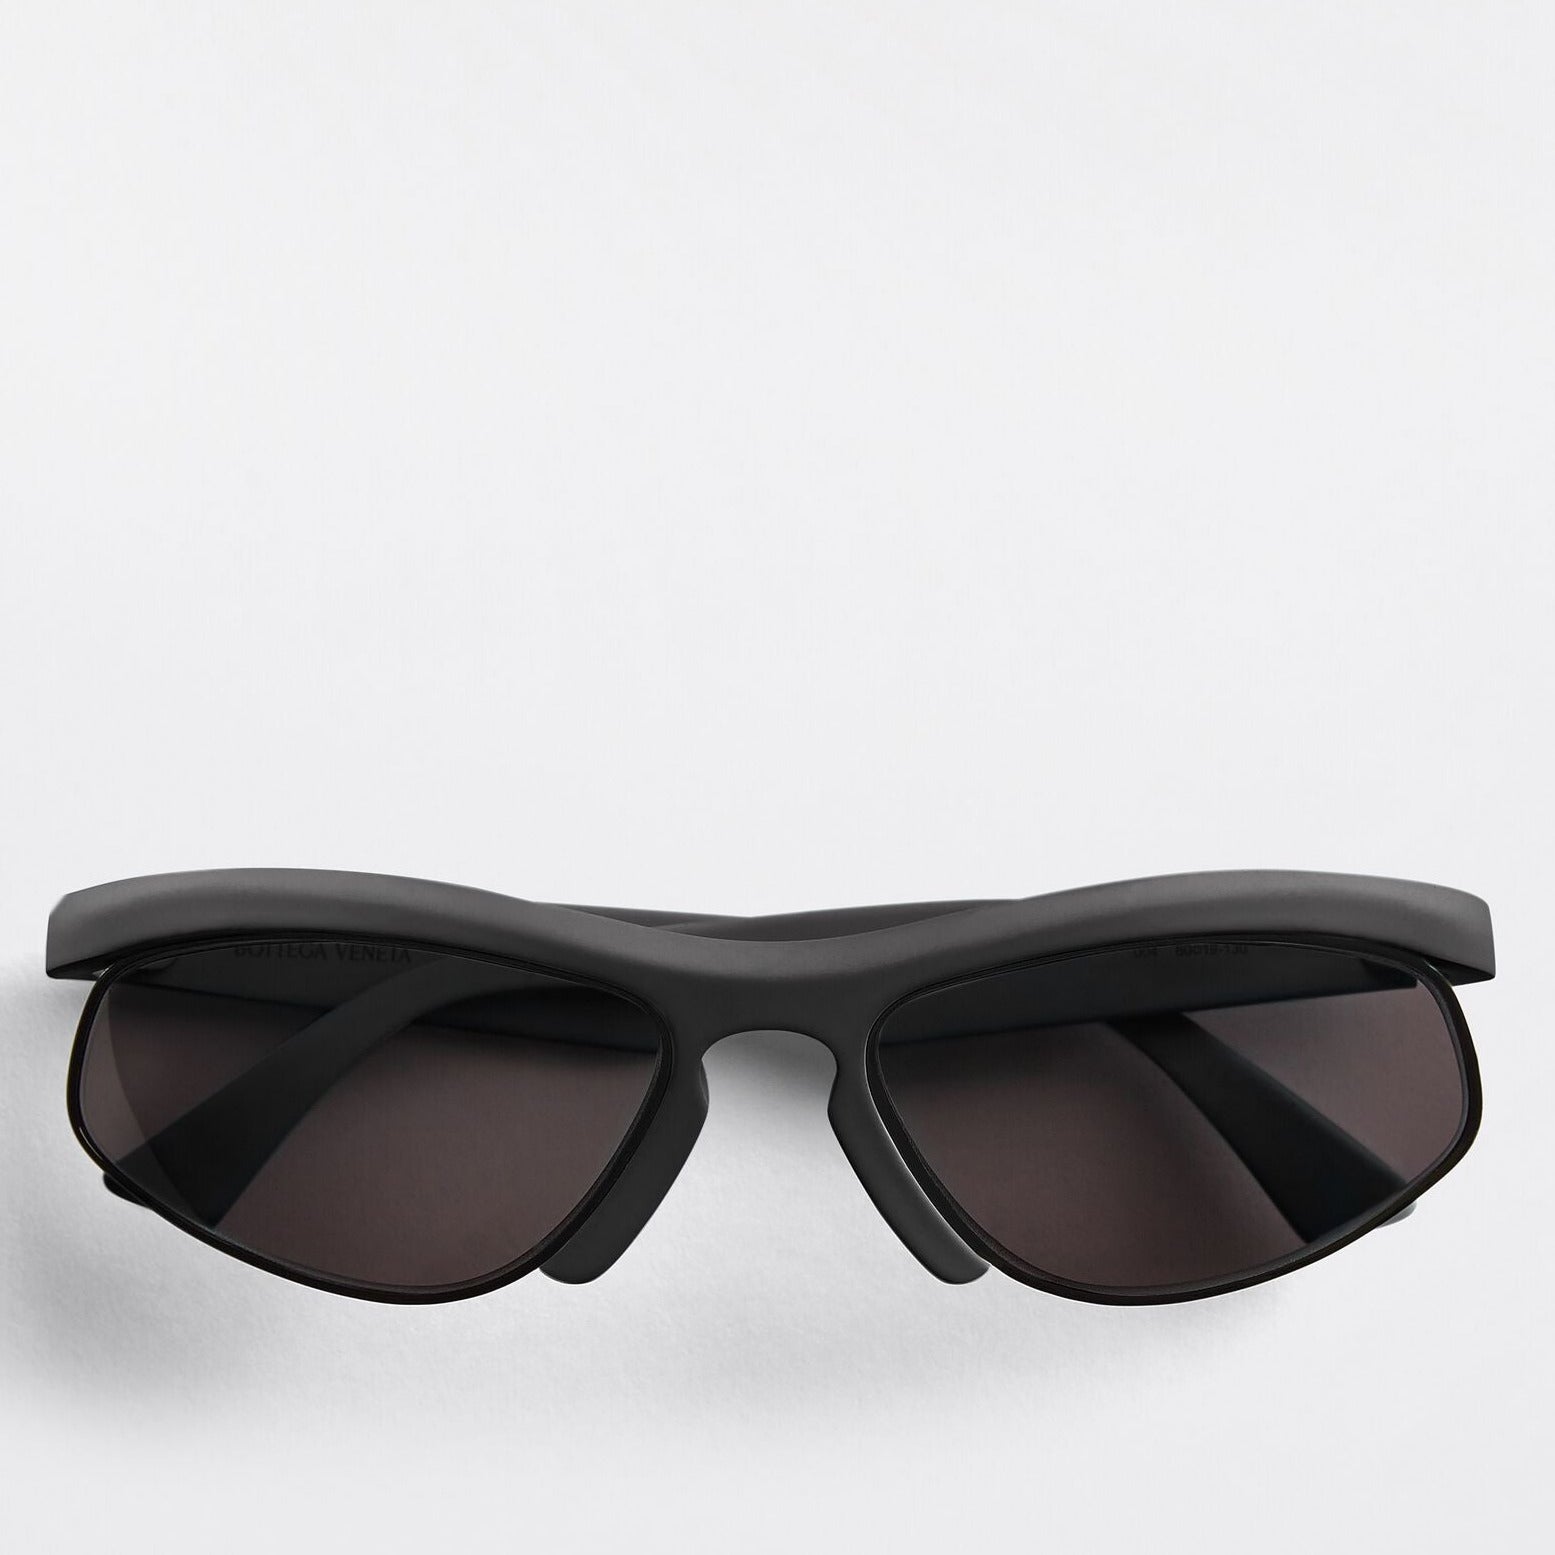 sunglasses photography #sunglasses Oval tortoiseshell-acetate